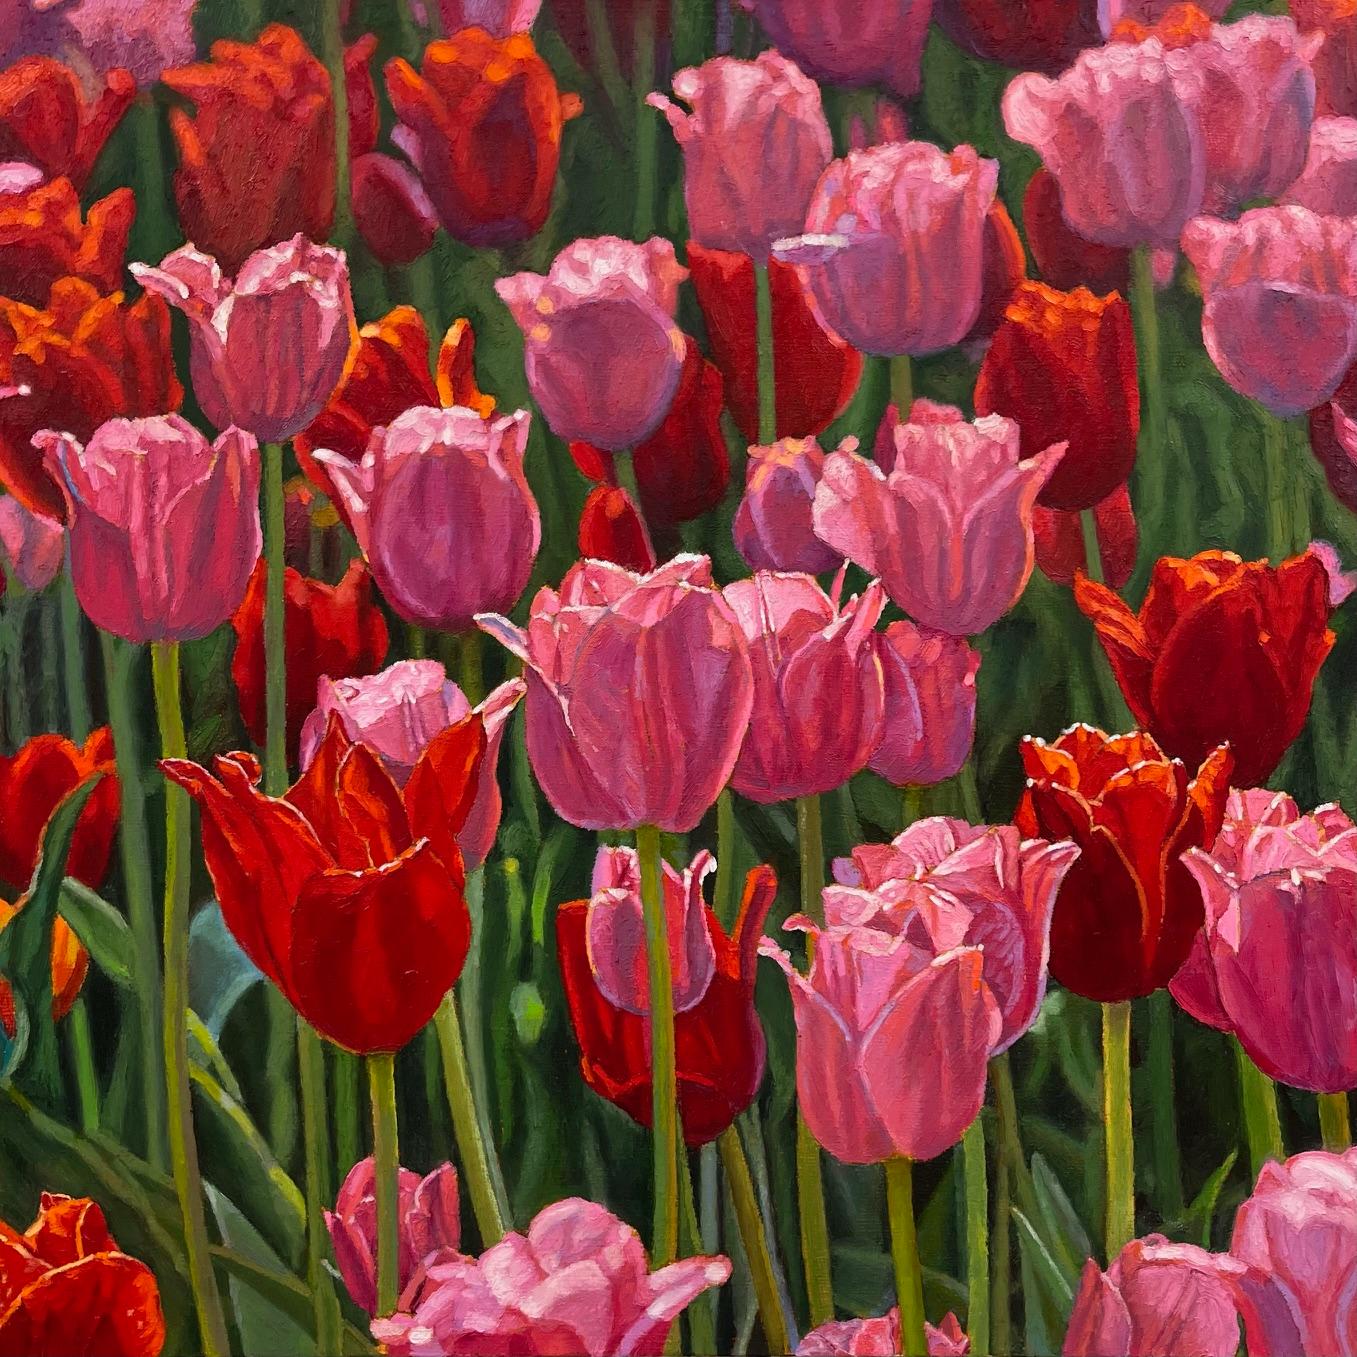 Jeffrey Vaughn Landscape Painting – Rosa und rote Tulpen